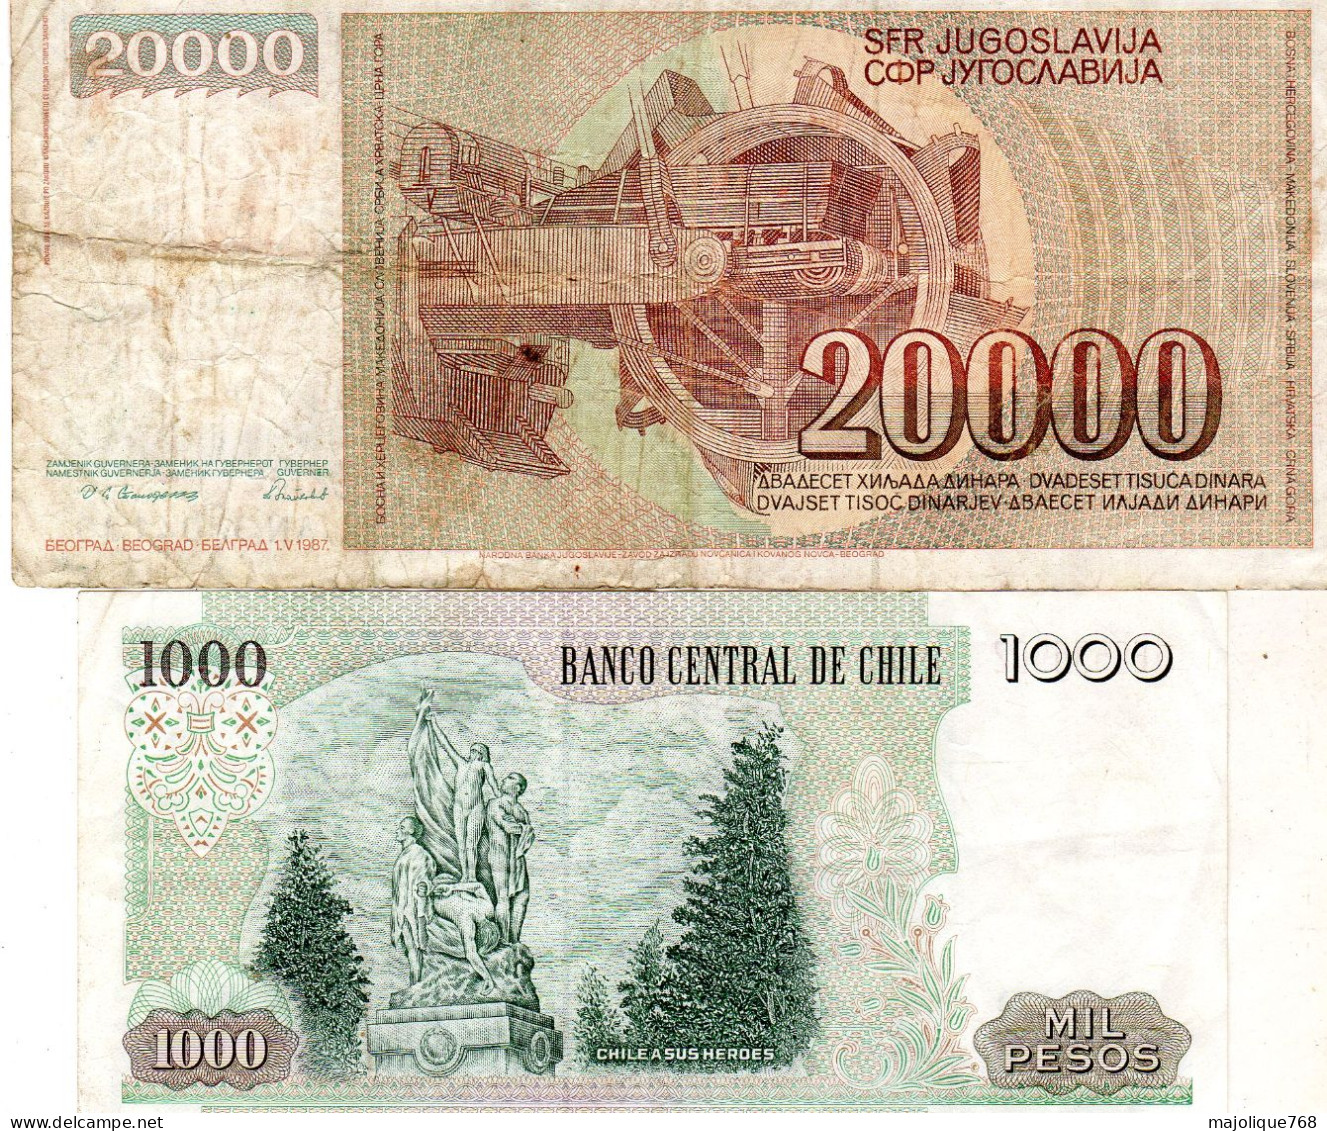 Lot De 2 Billets étranger - 20000 Dinara 1987 De Yougoslavie - 1000 Pésos 2005 Du Chili - Lots & Kiloware - Banknotes